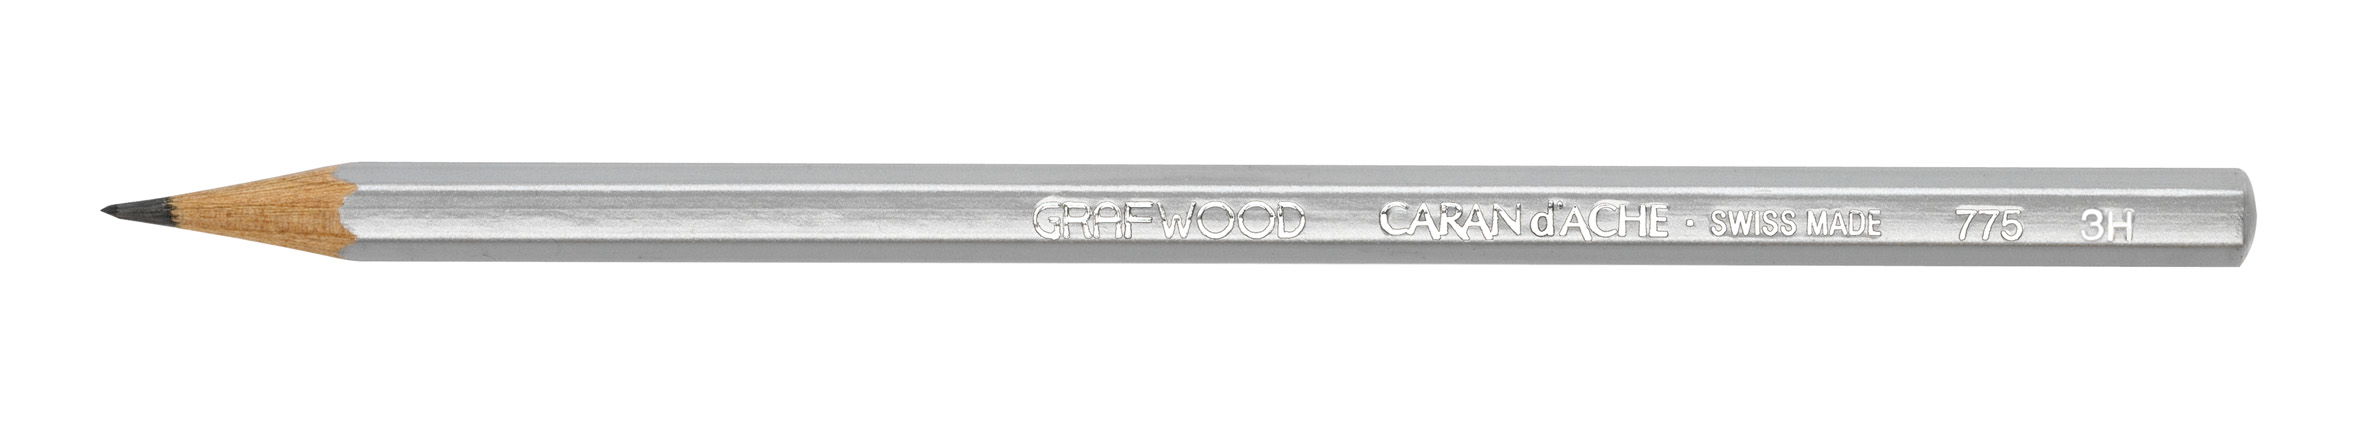 Caran dAche Grafwood Bleistift